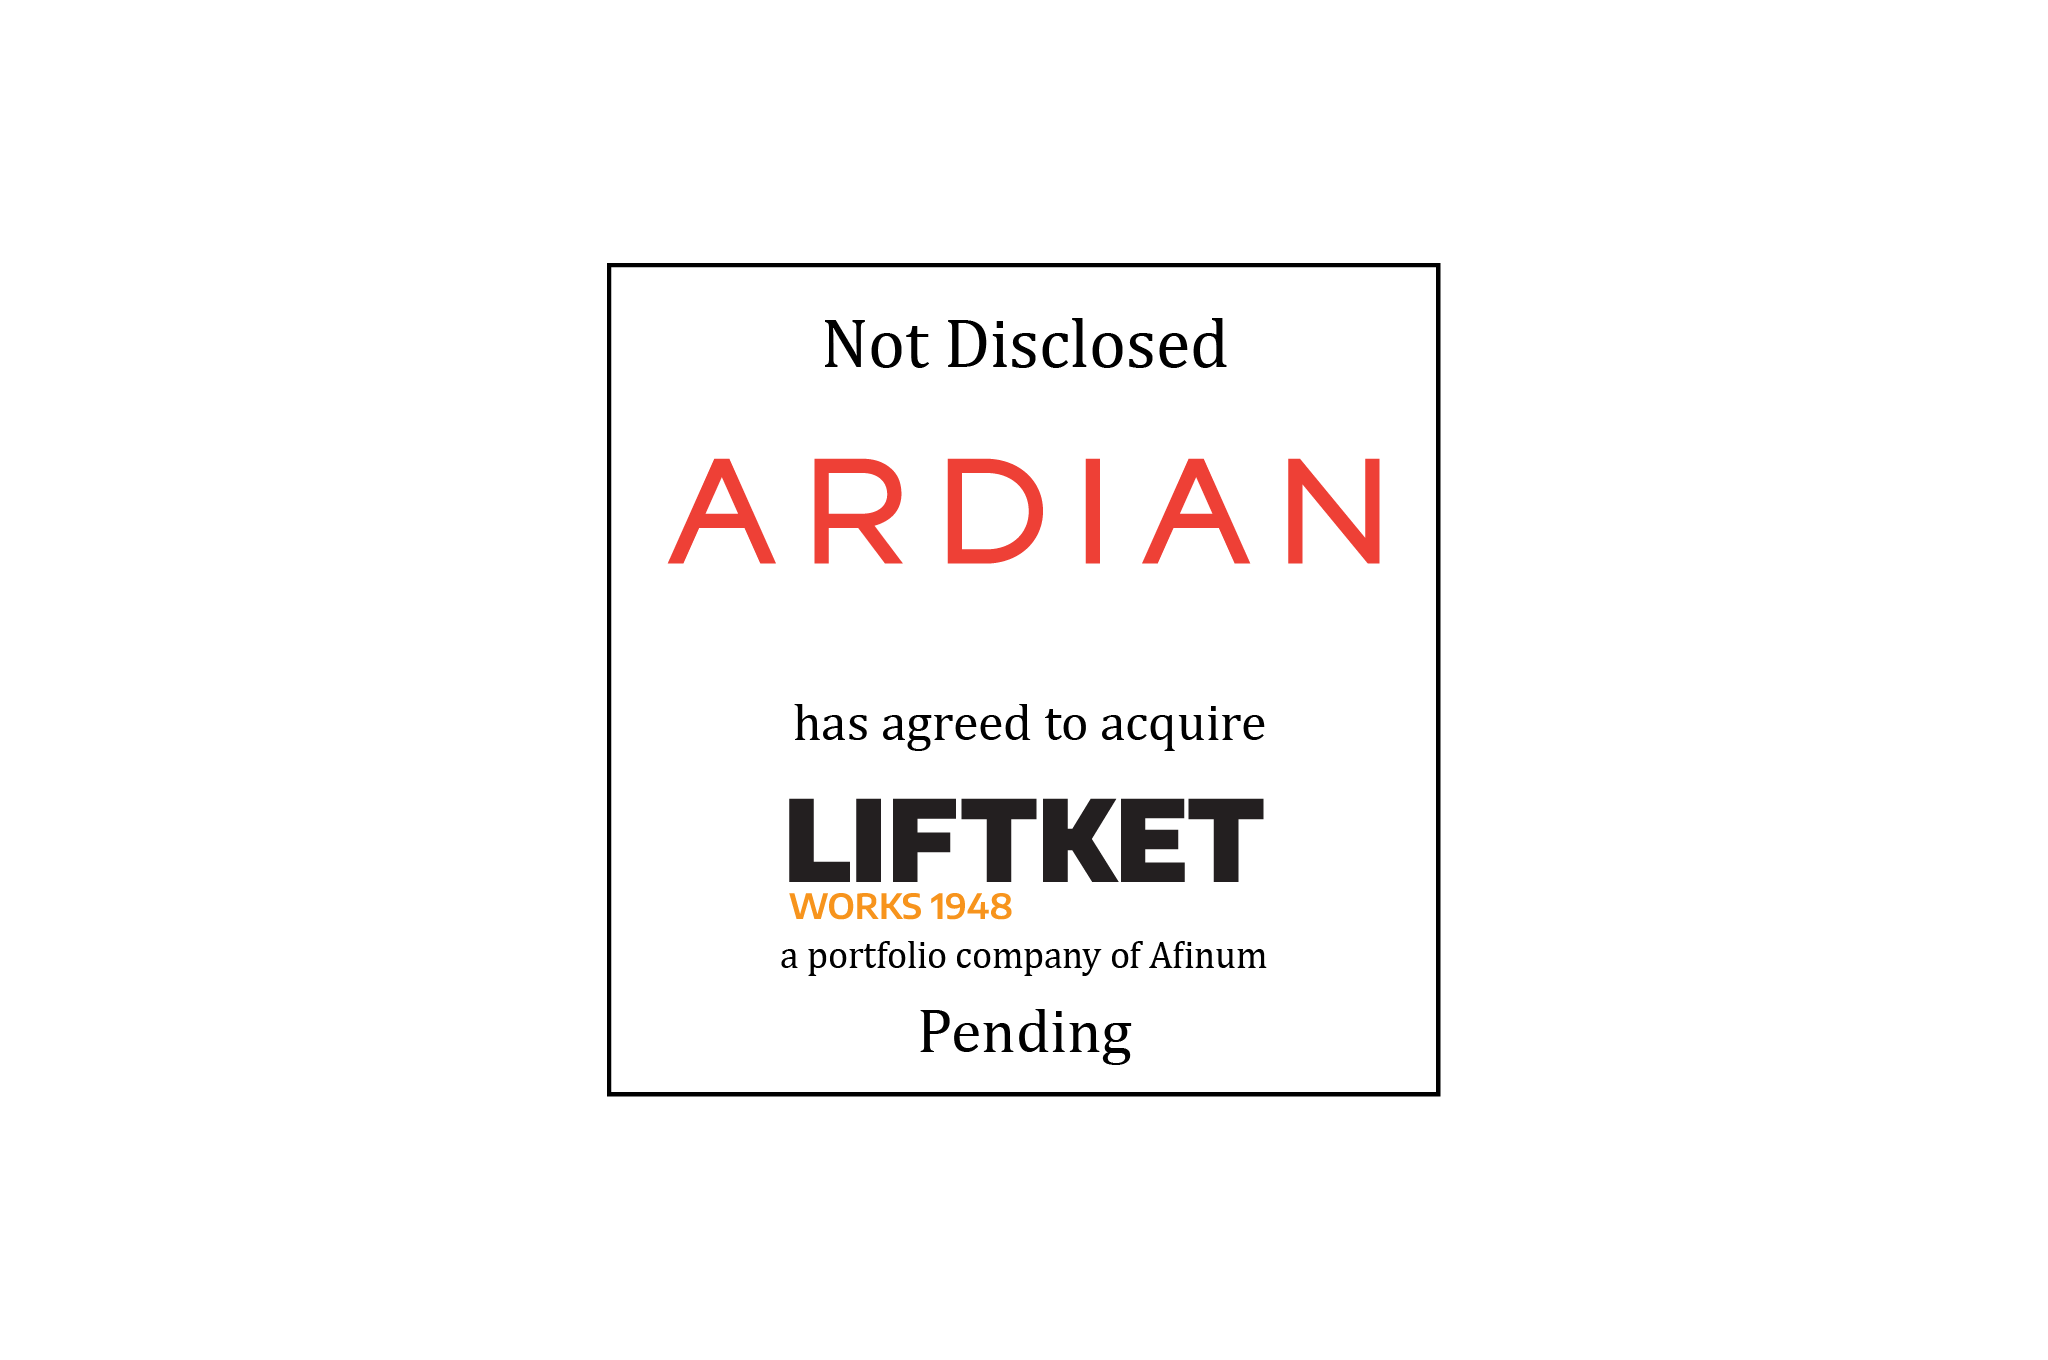 Ardian (logo) Has Agreed to Acquire LIFTKET (logo), a portfolio company of Afinum